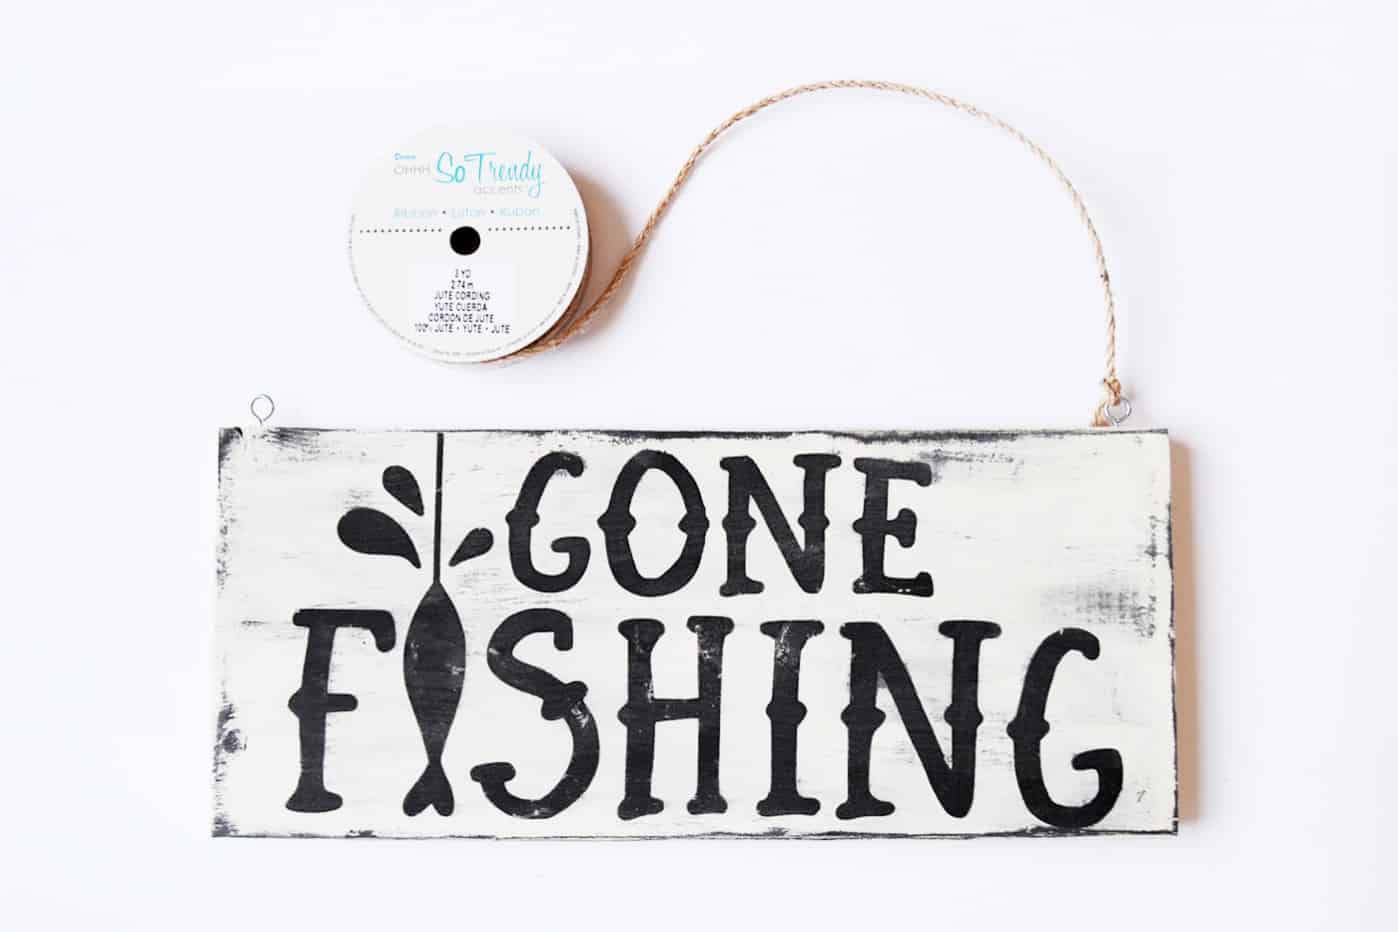 Tying jute to a gone fishing sign